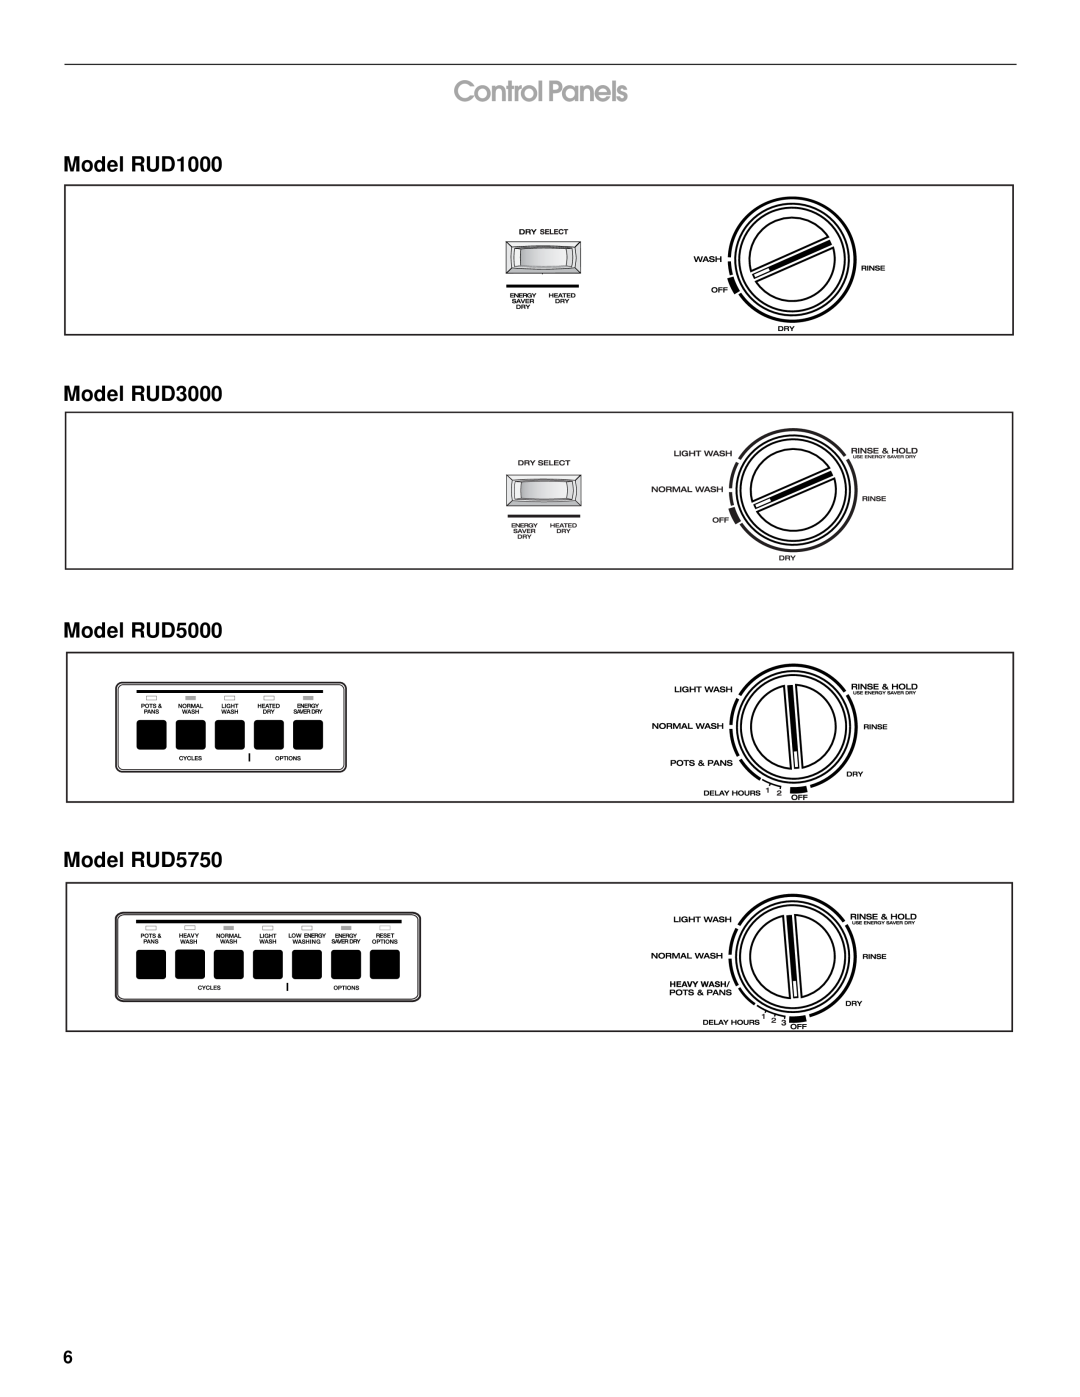 Whirlpool manual Control Panels, Model RUD1000 Model RUD3000 Model RUD5000 Model RUD5750 